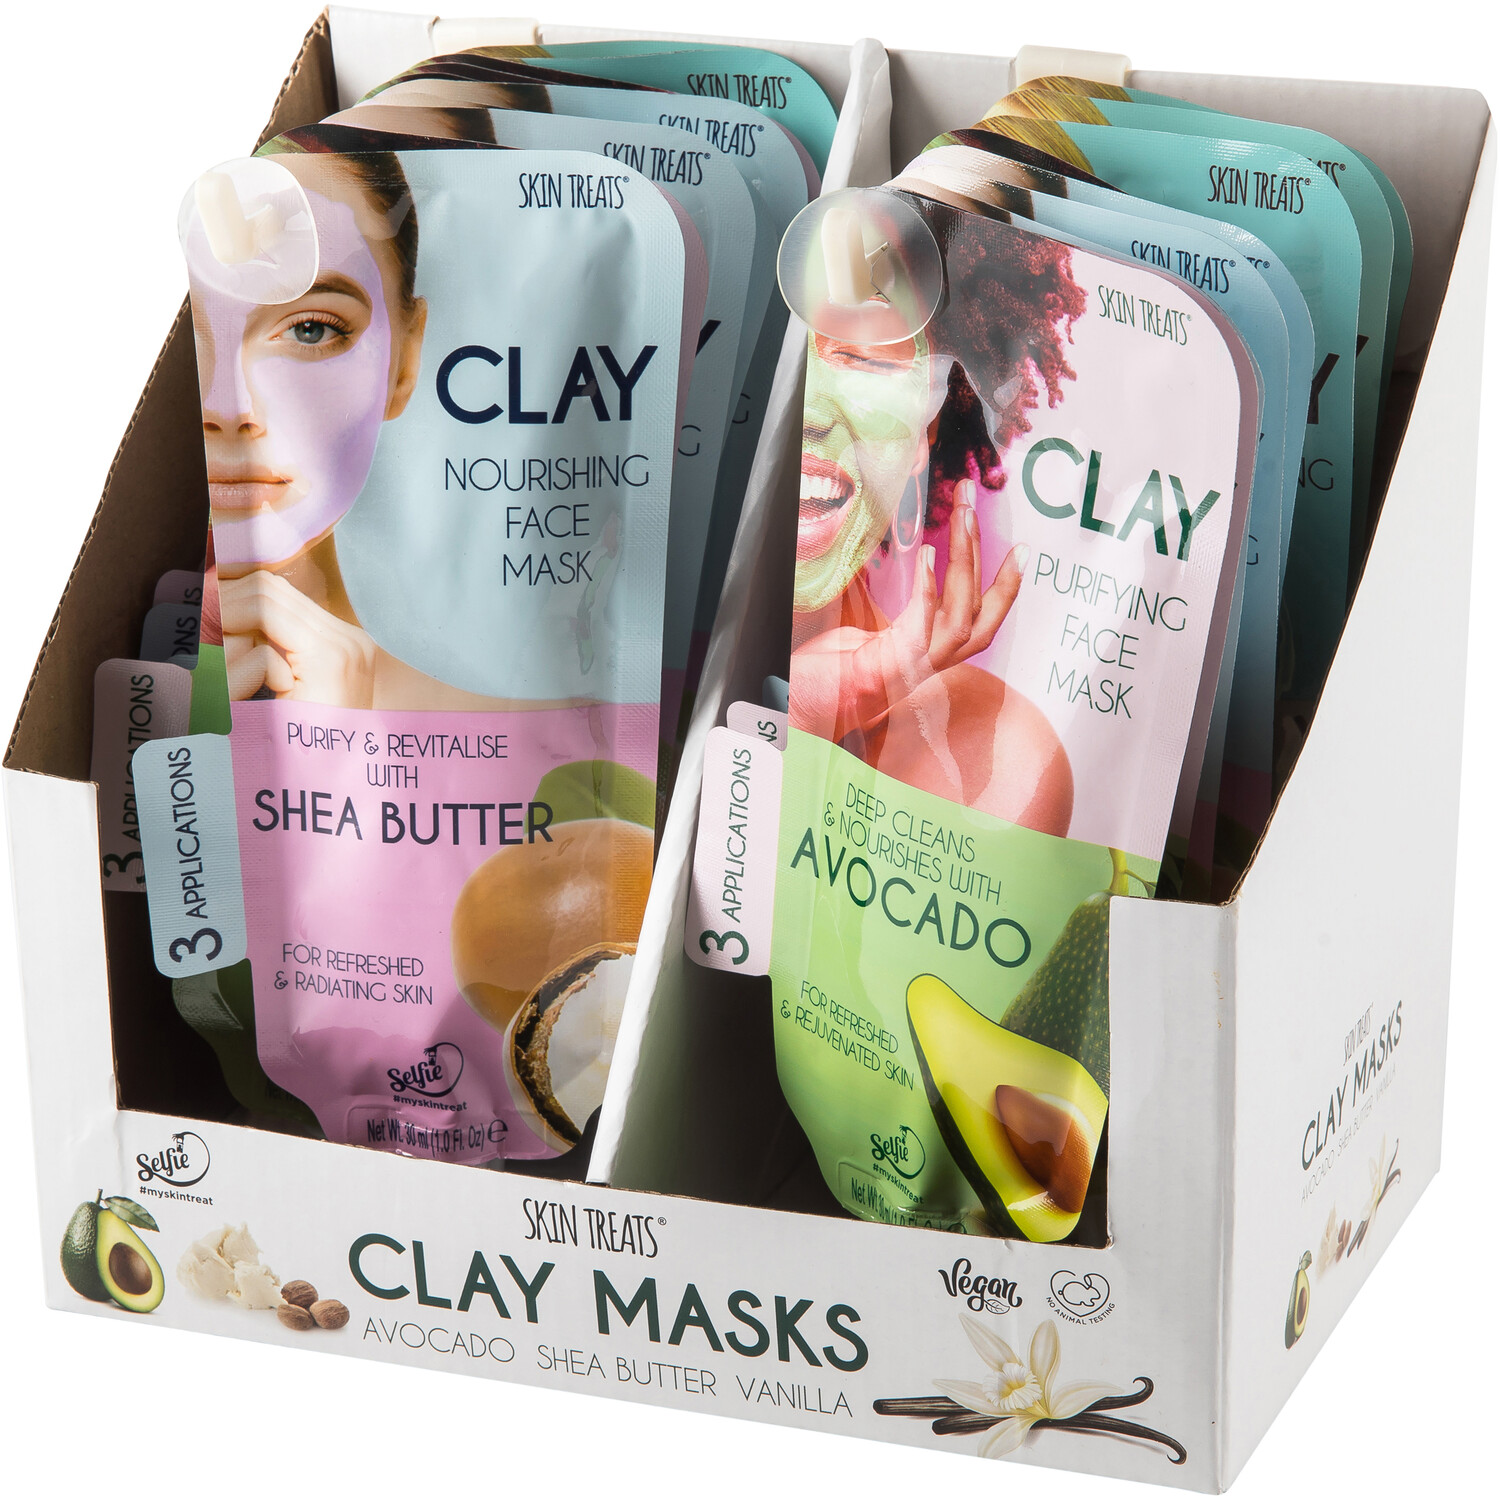 Skin Treats Clay Mask Image 1